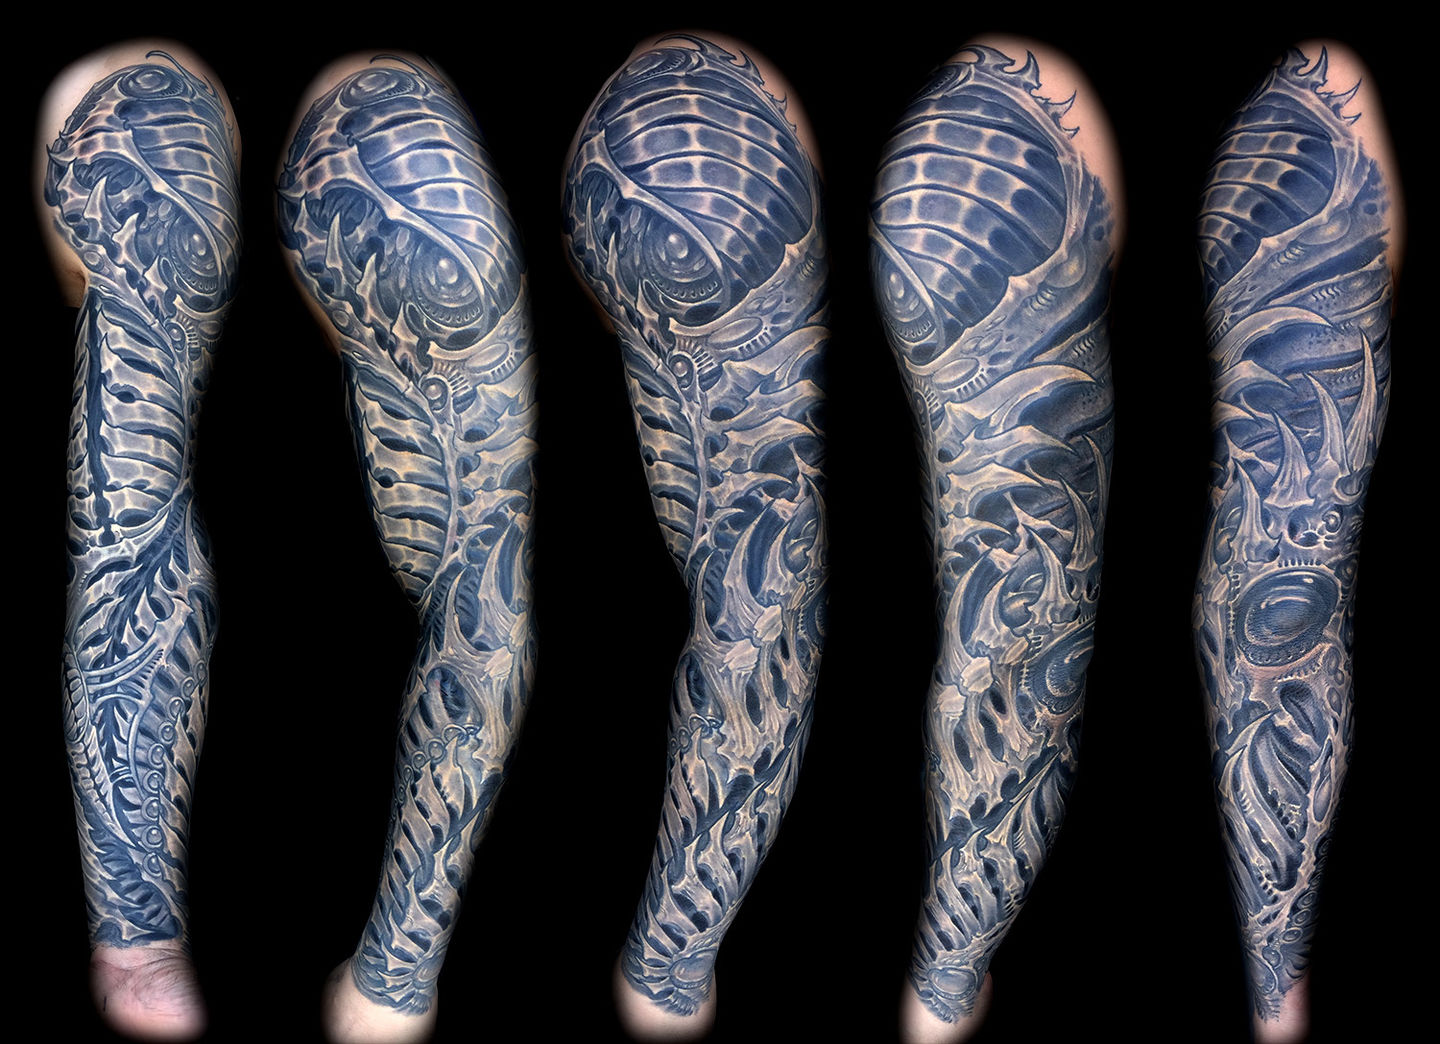 Best-las-vegas-tattoo-artists-shops-joe-riley-inner-visions-tattoo-biomechanical-sleeve-tattoo